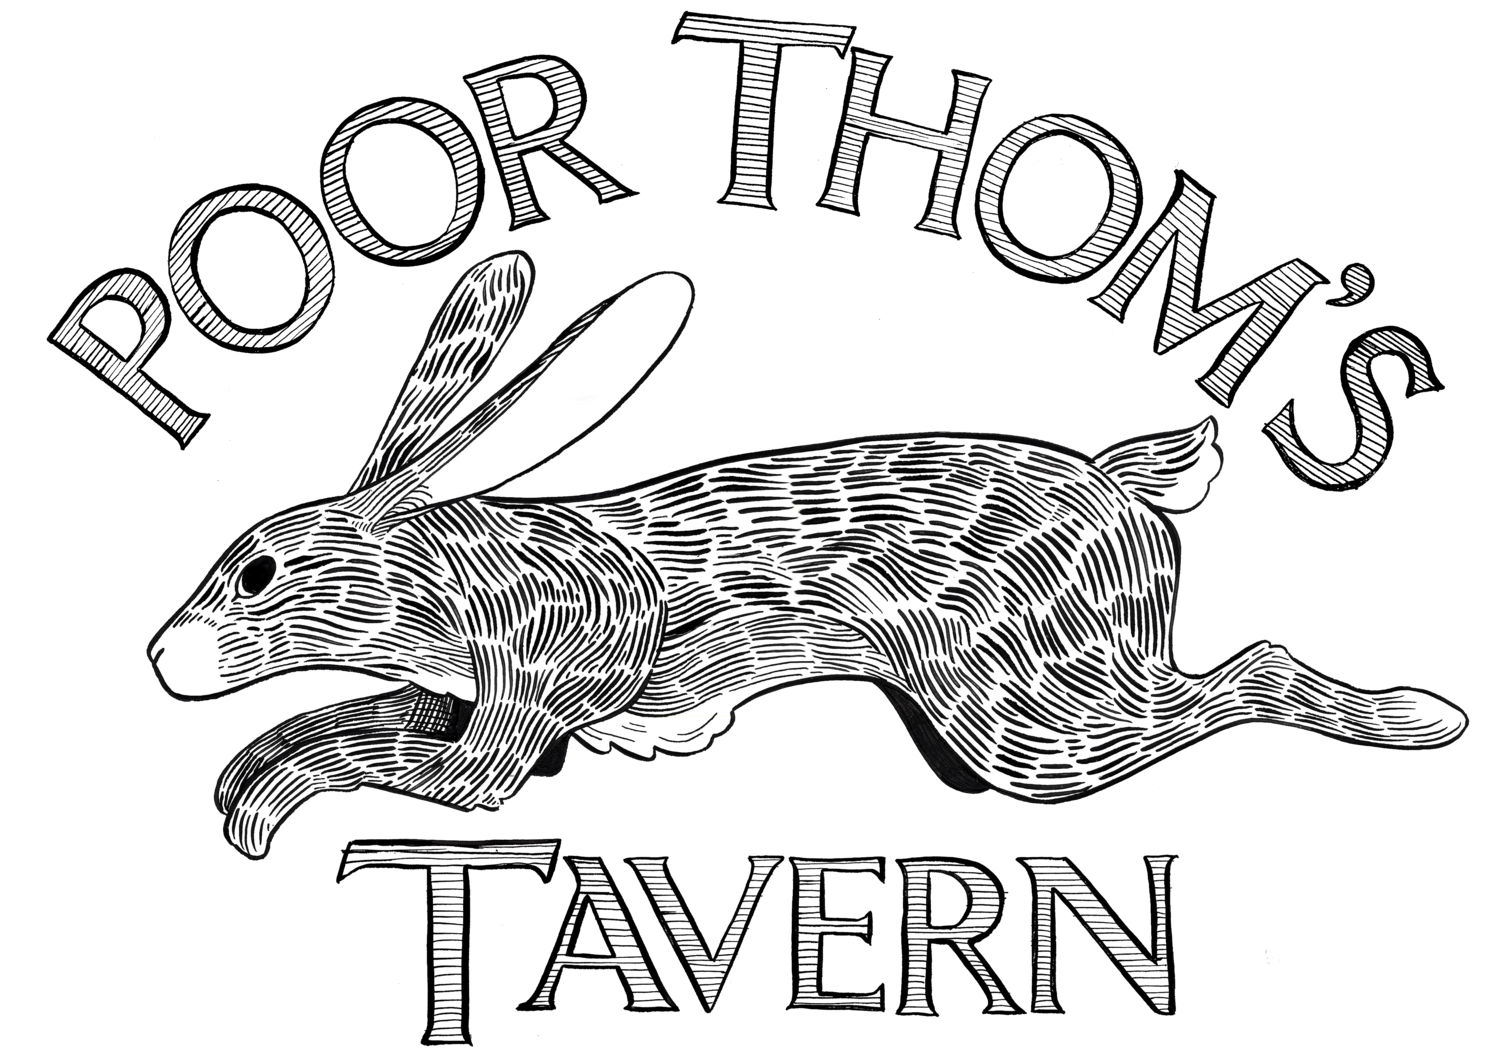 Poor Thom's Tavern